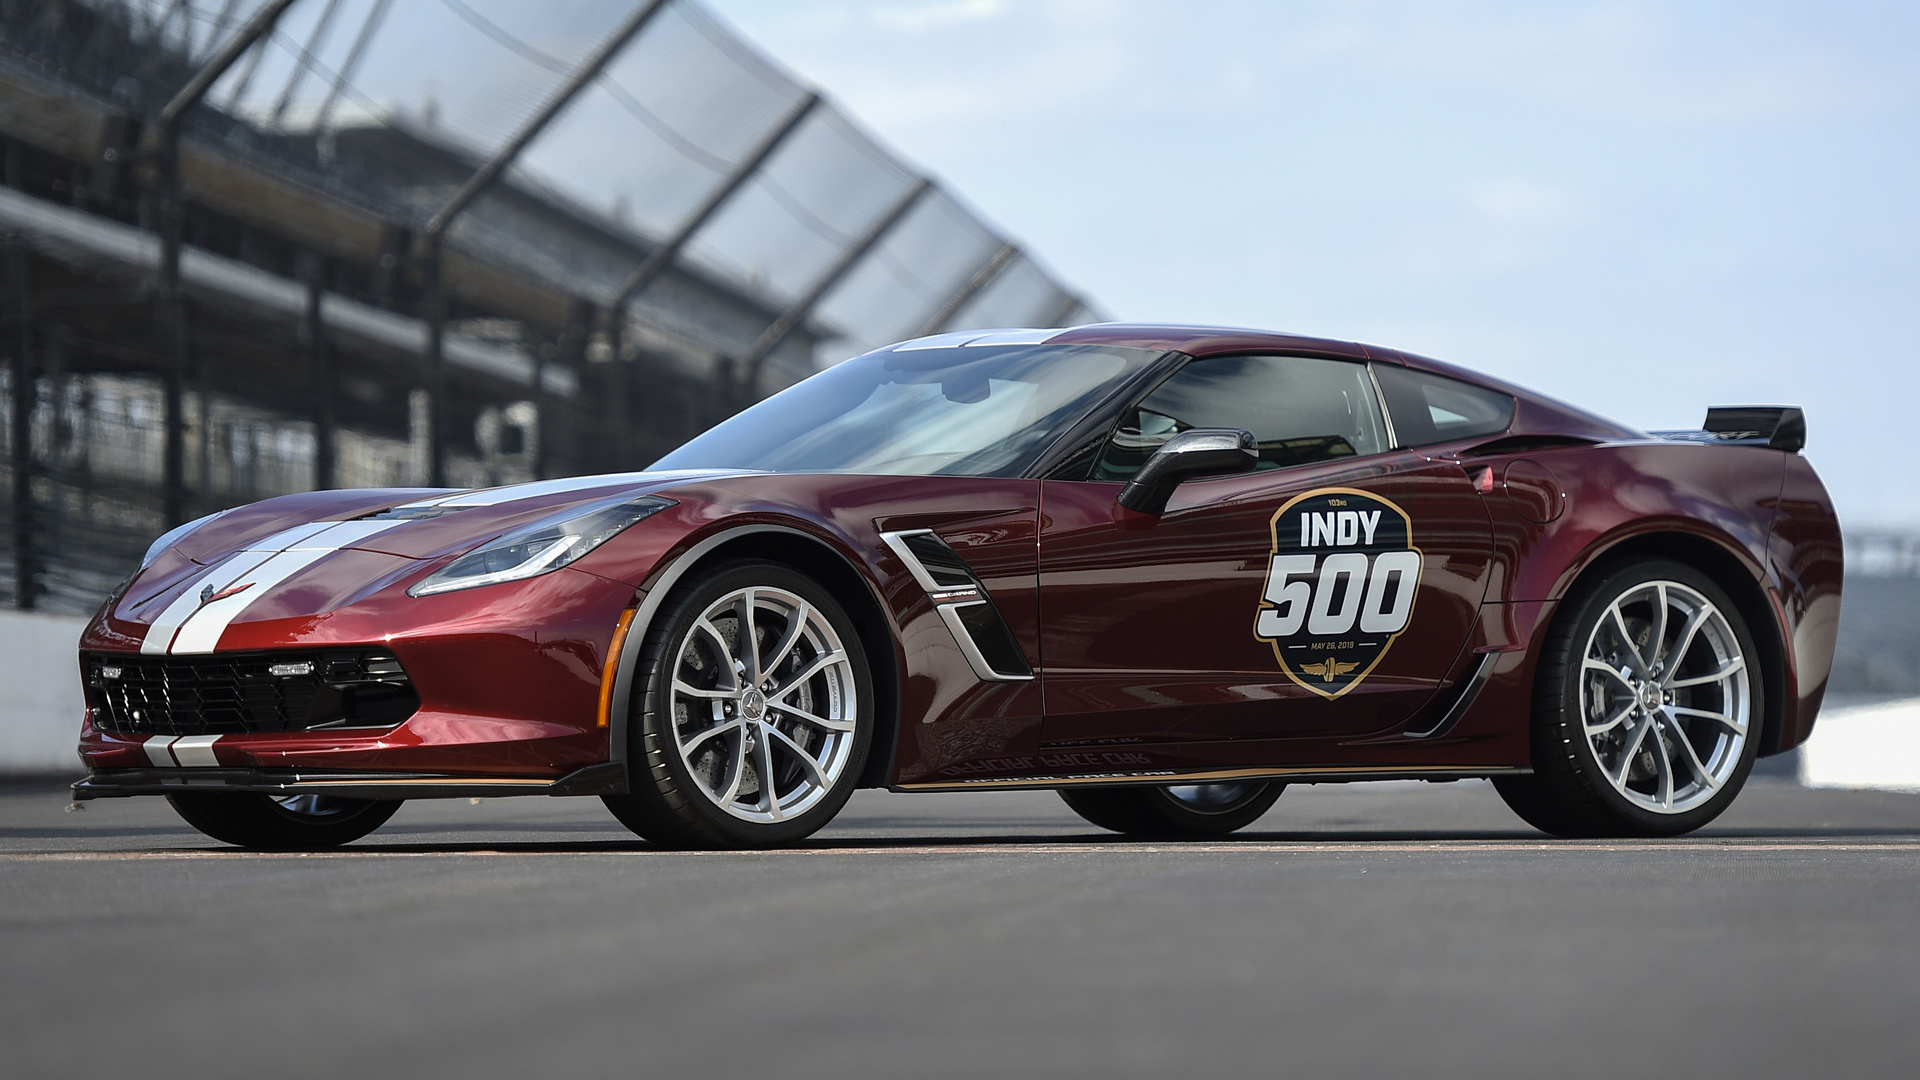 Corvette Of The Day: 2019 Chevrolet Corvette Grand Sport Indy 500 Pace Car